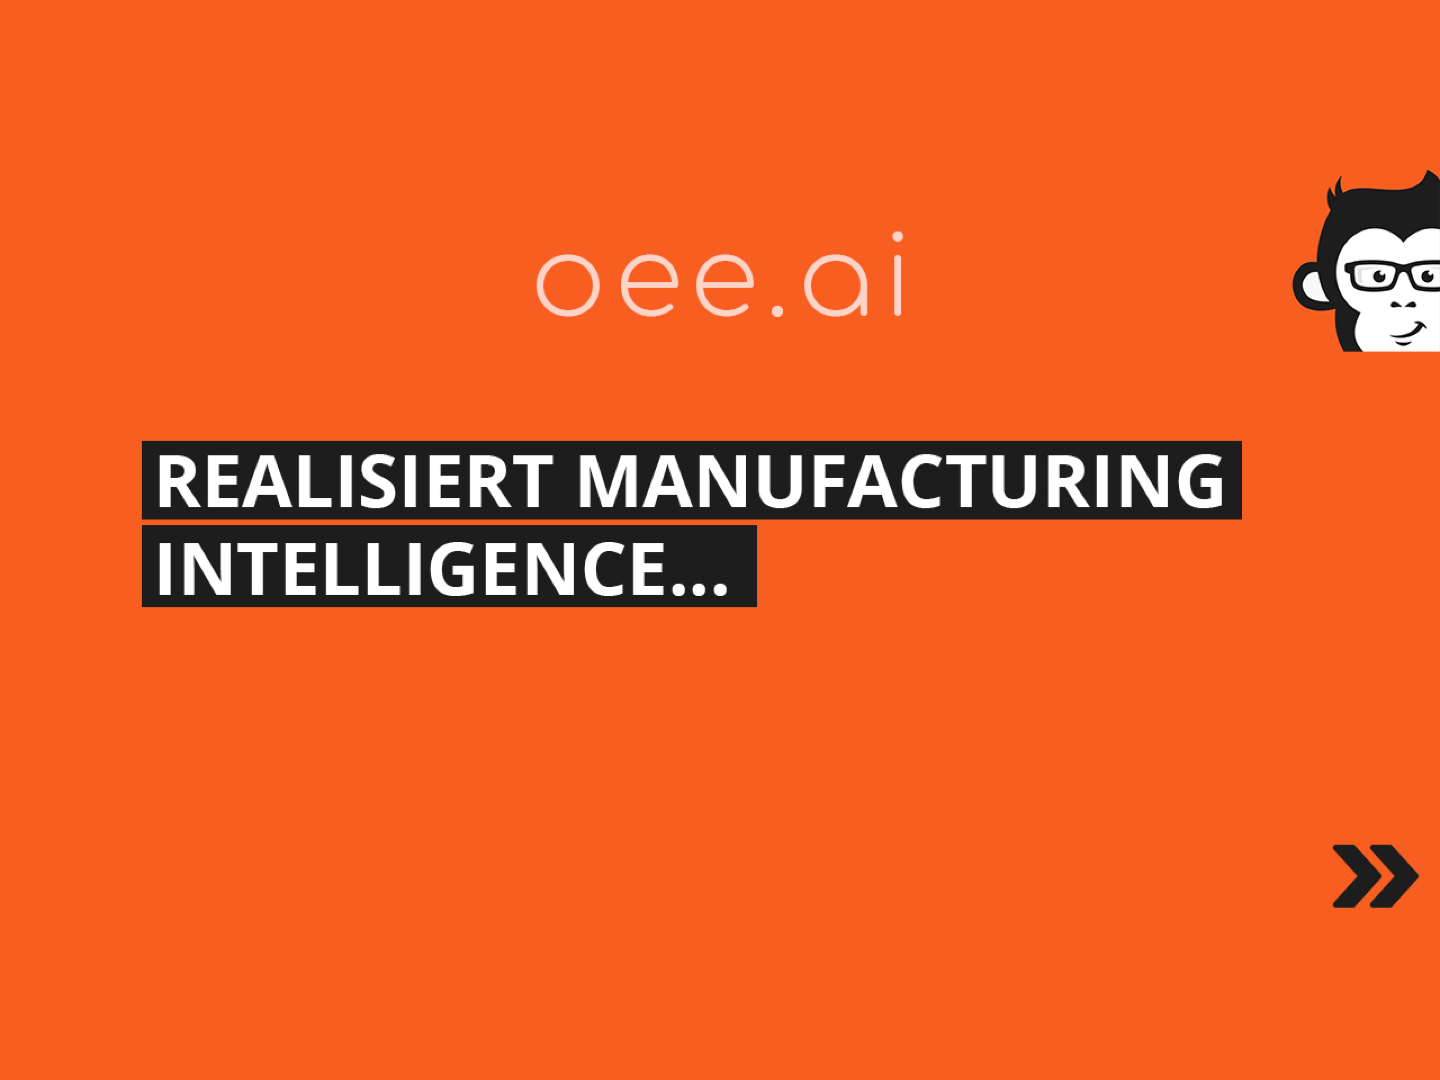 oee.ai realisiert manufacturing intelligence